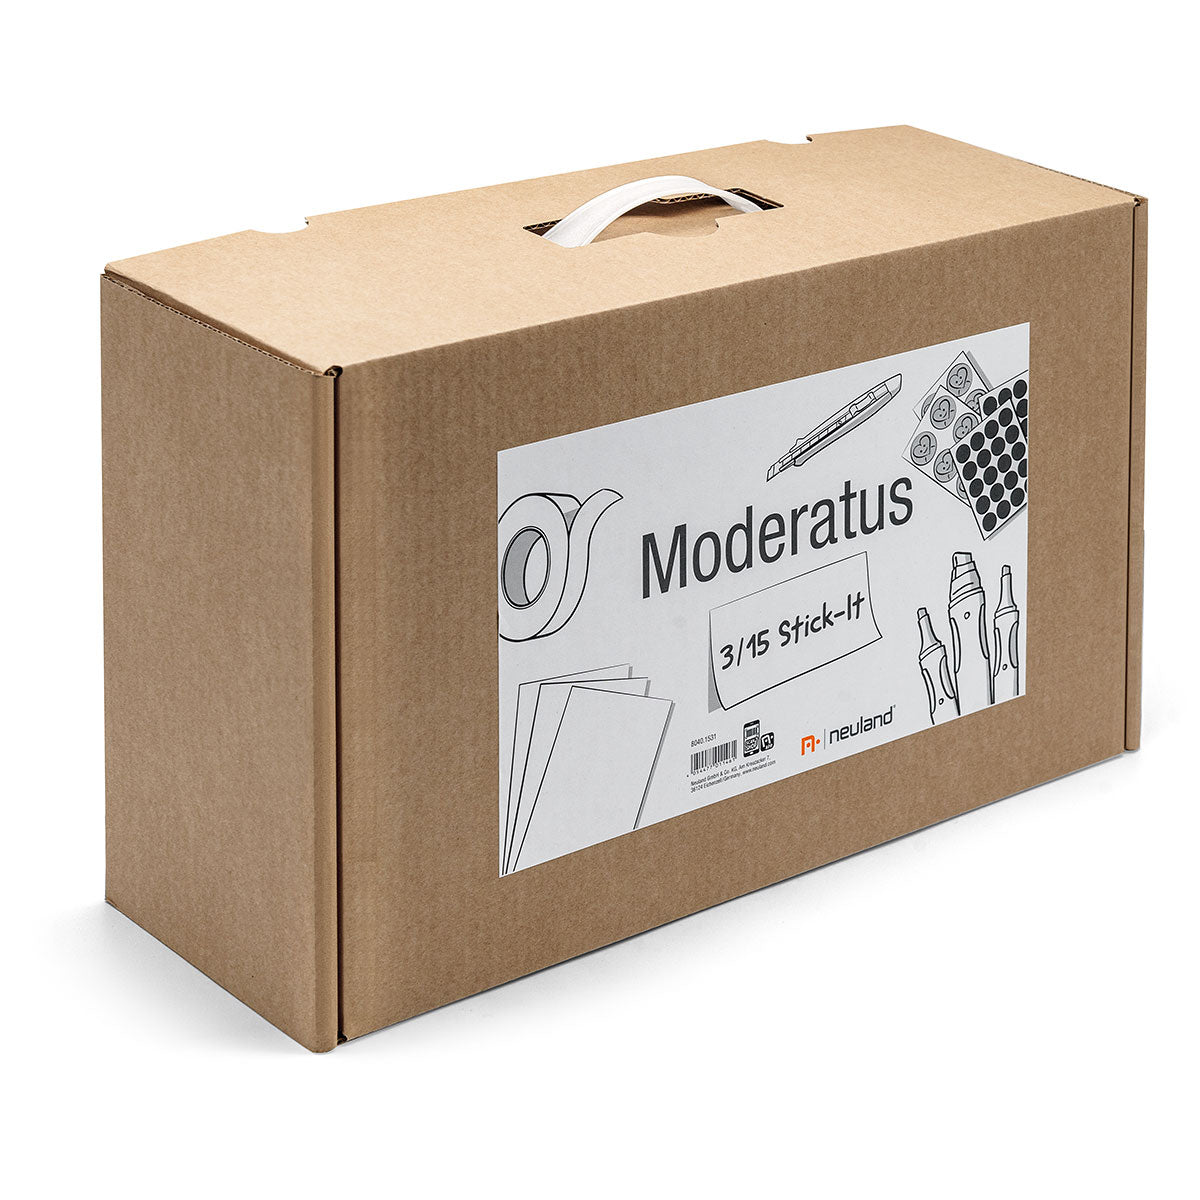 Moderatus® 3/15 Stick-It